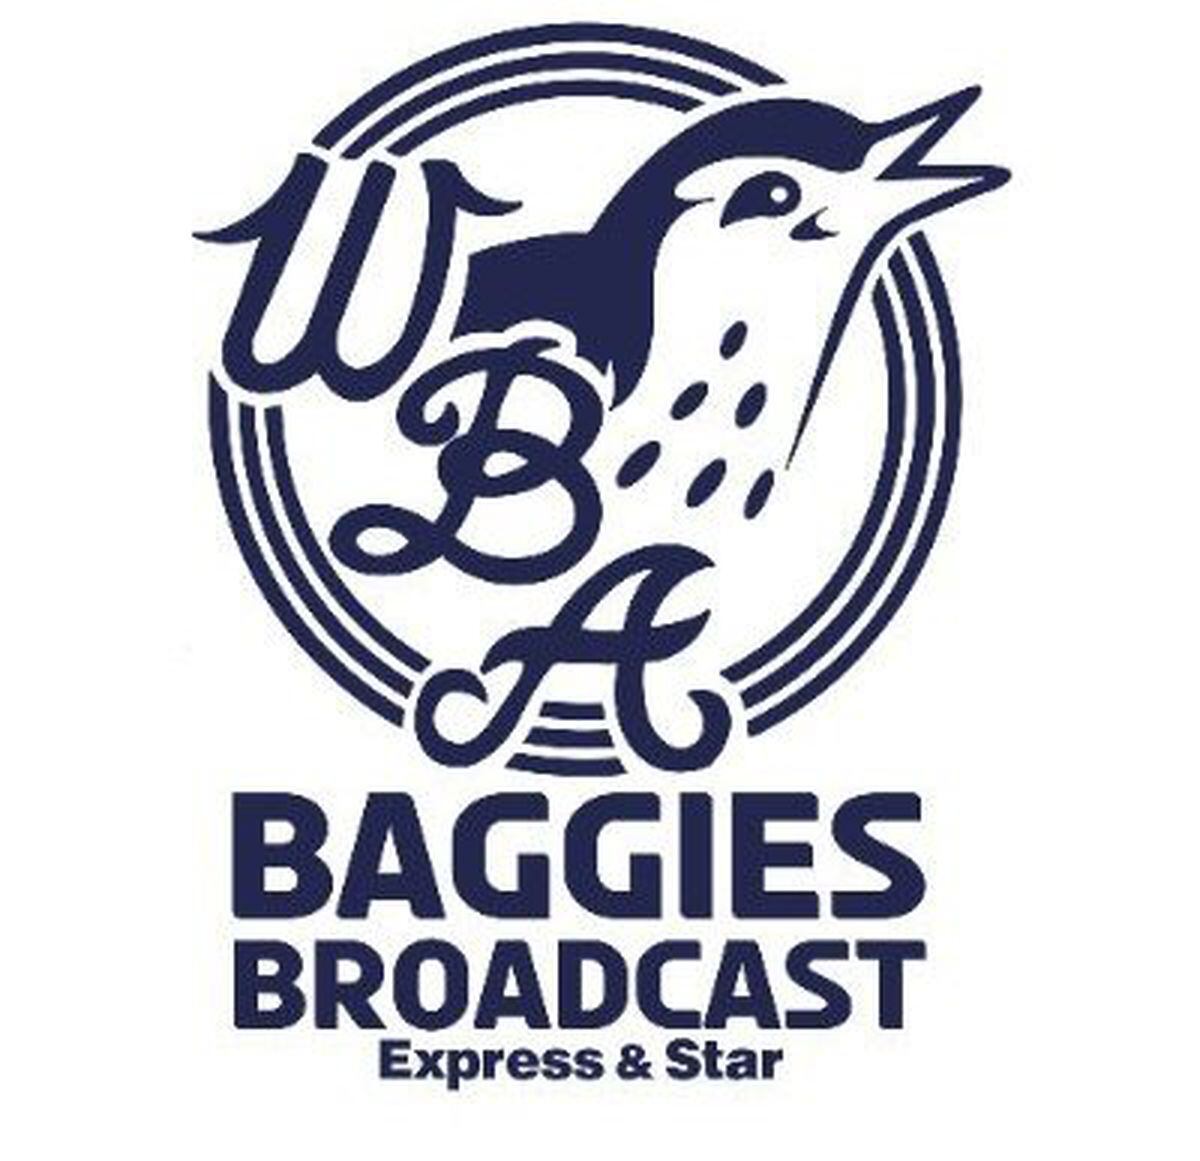 Baggies Broadcast with Jonny Drury & Lewis Cox